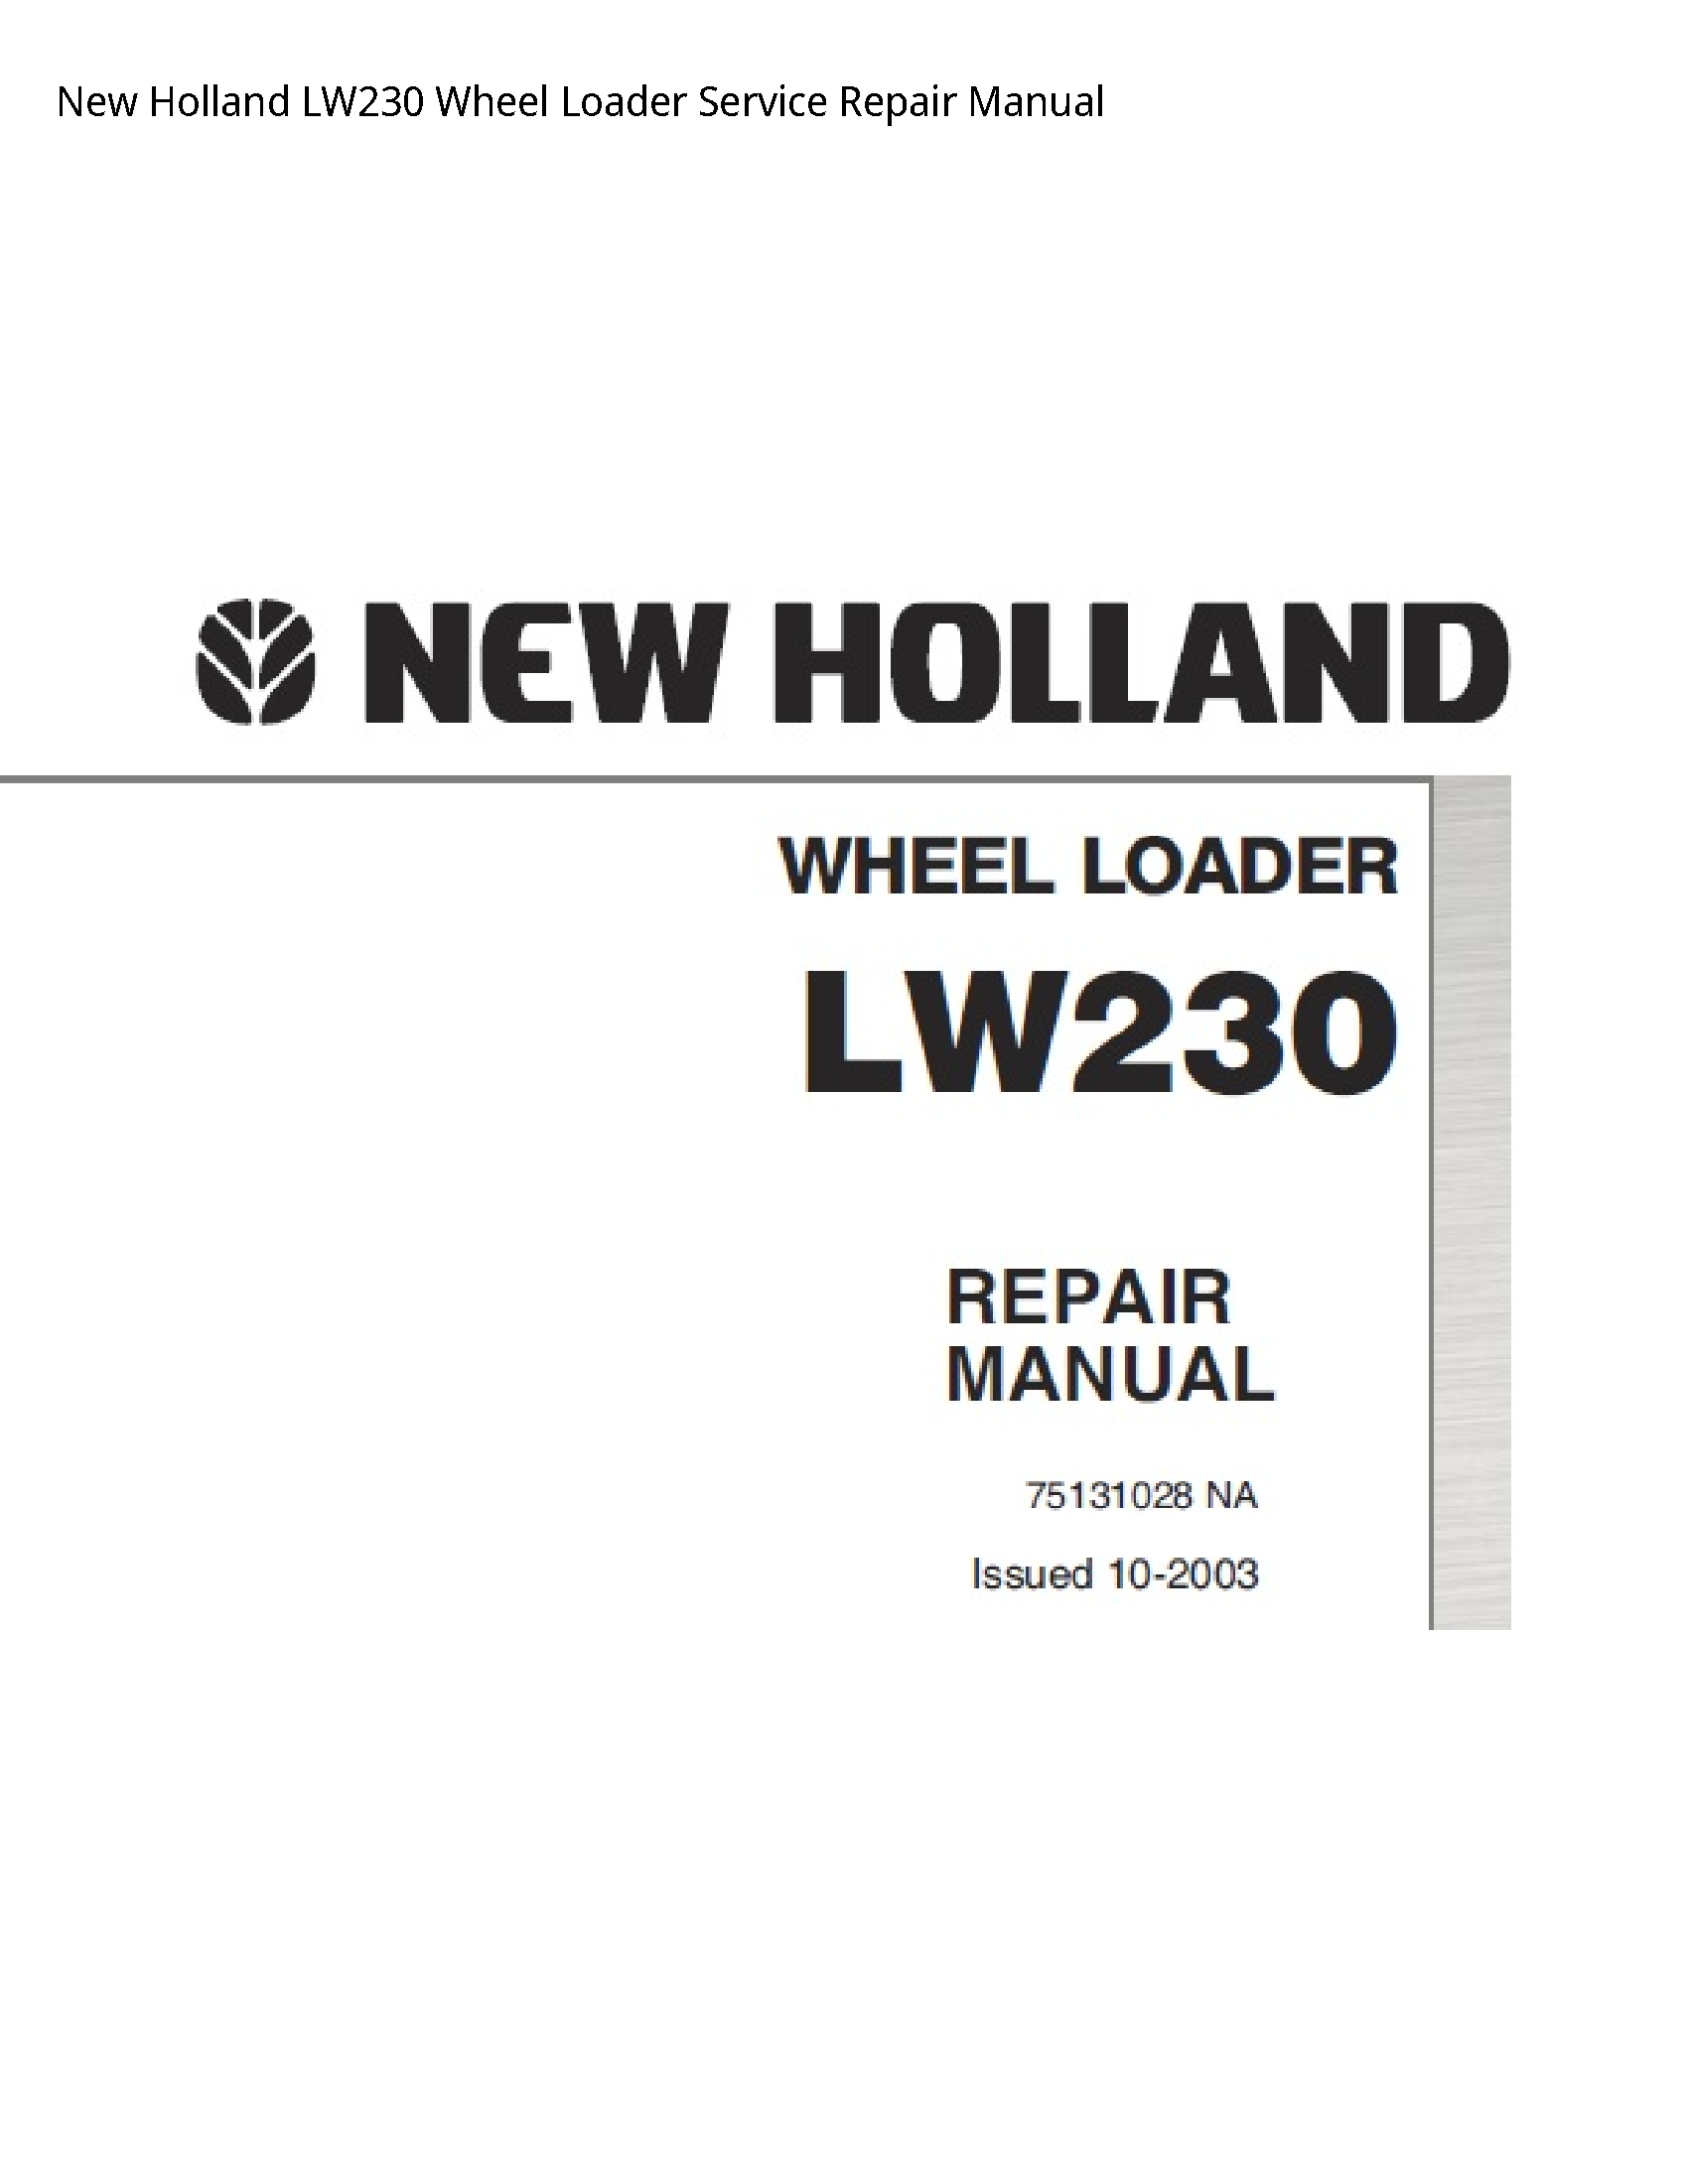 New Holland LW230 Wheel Loader manual